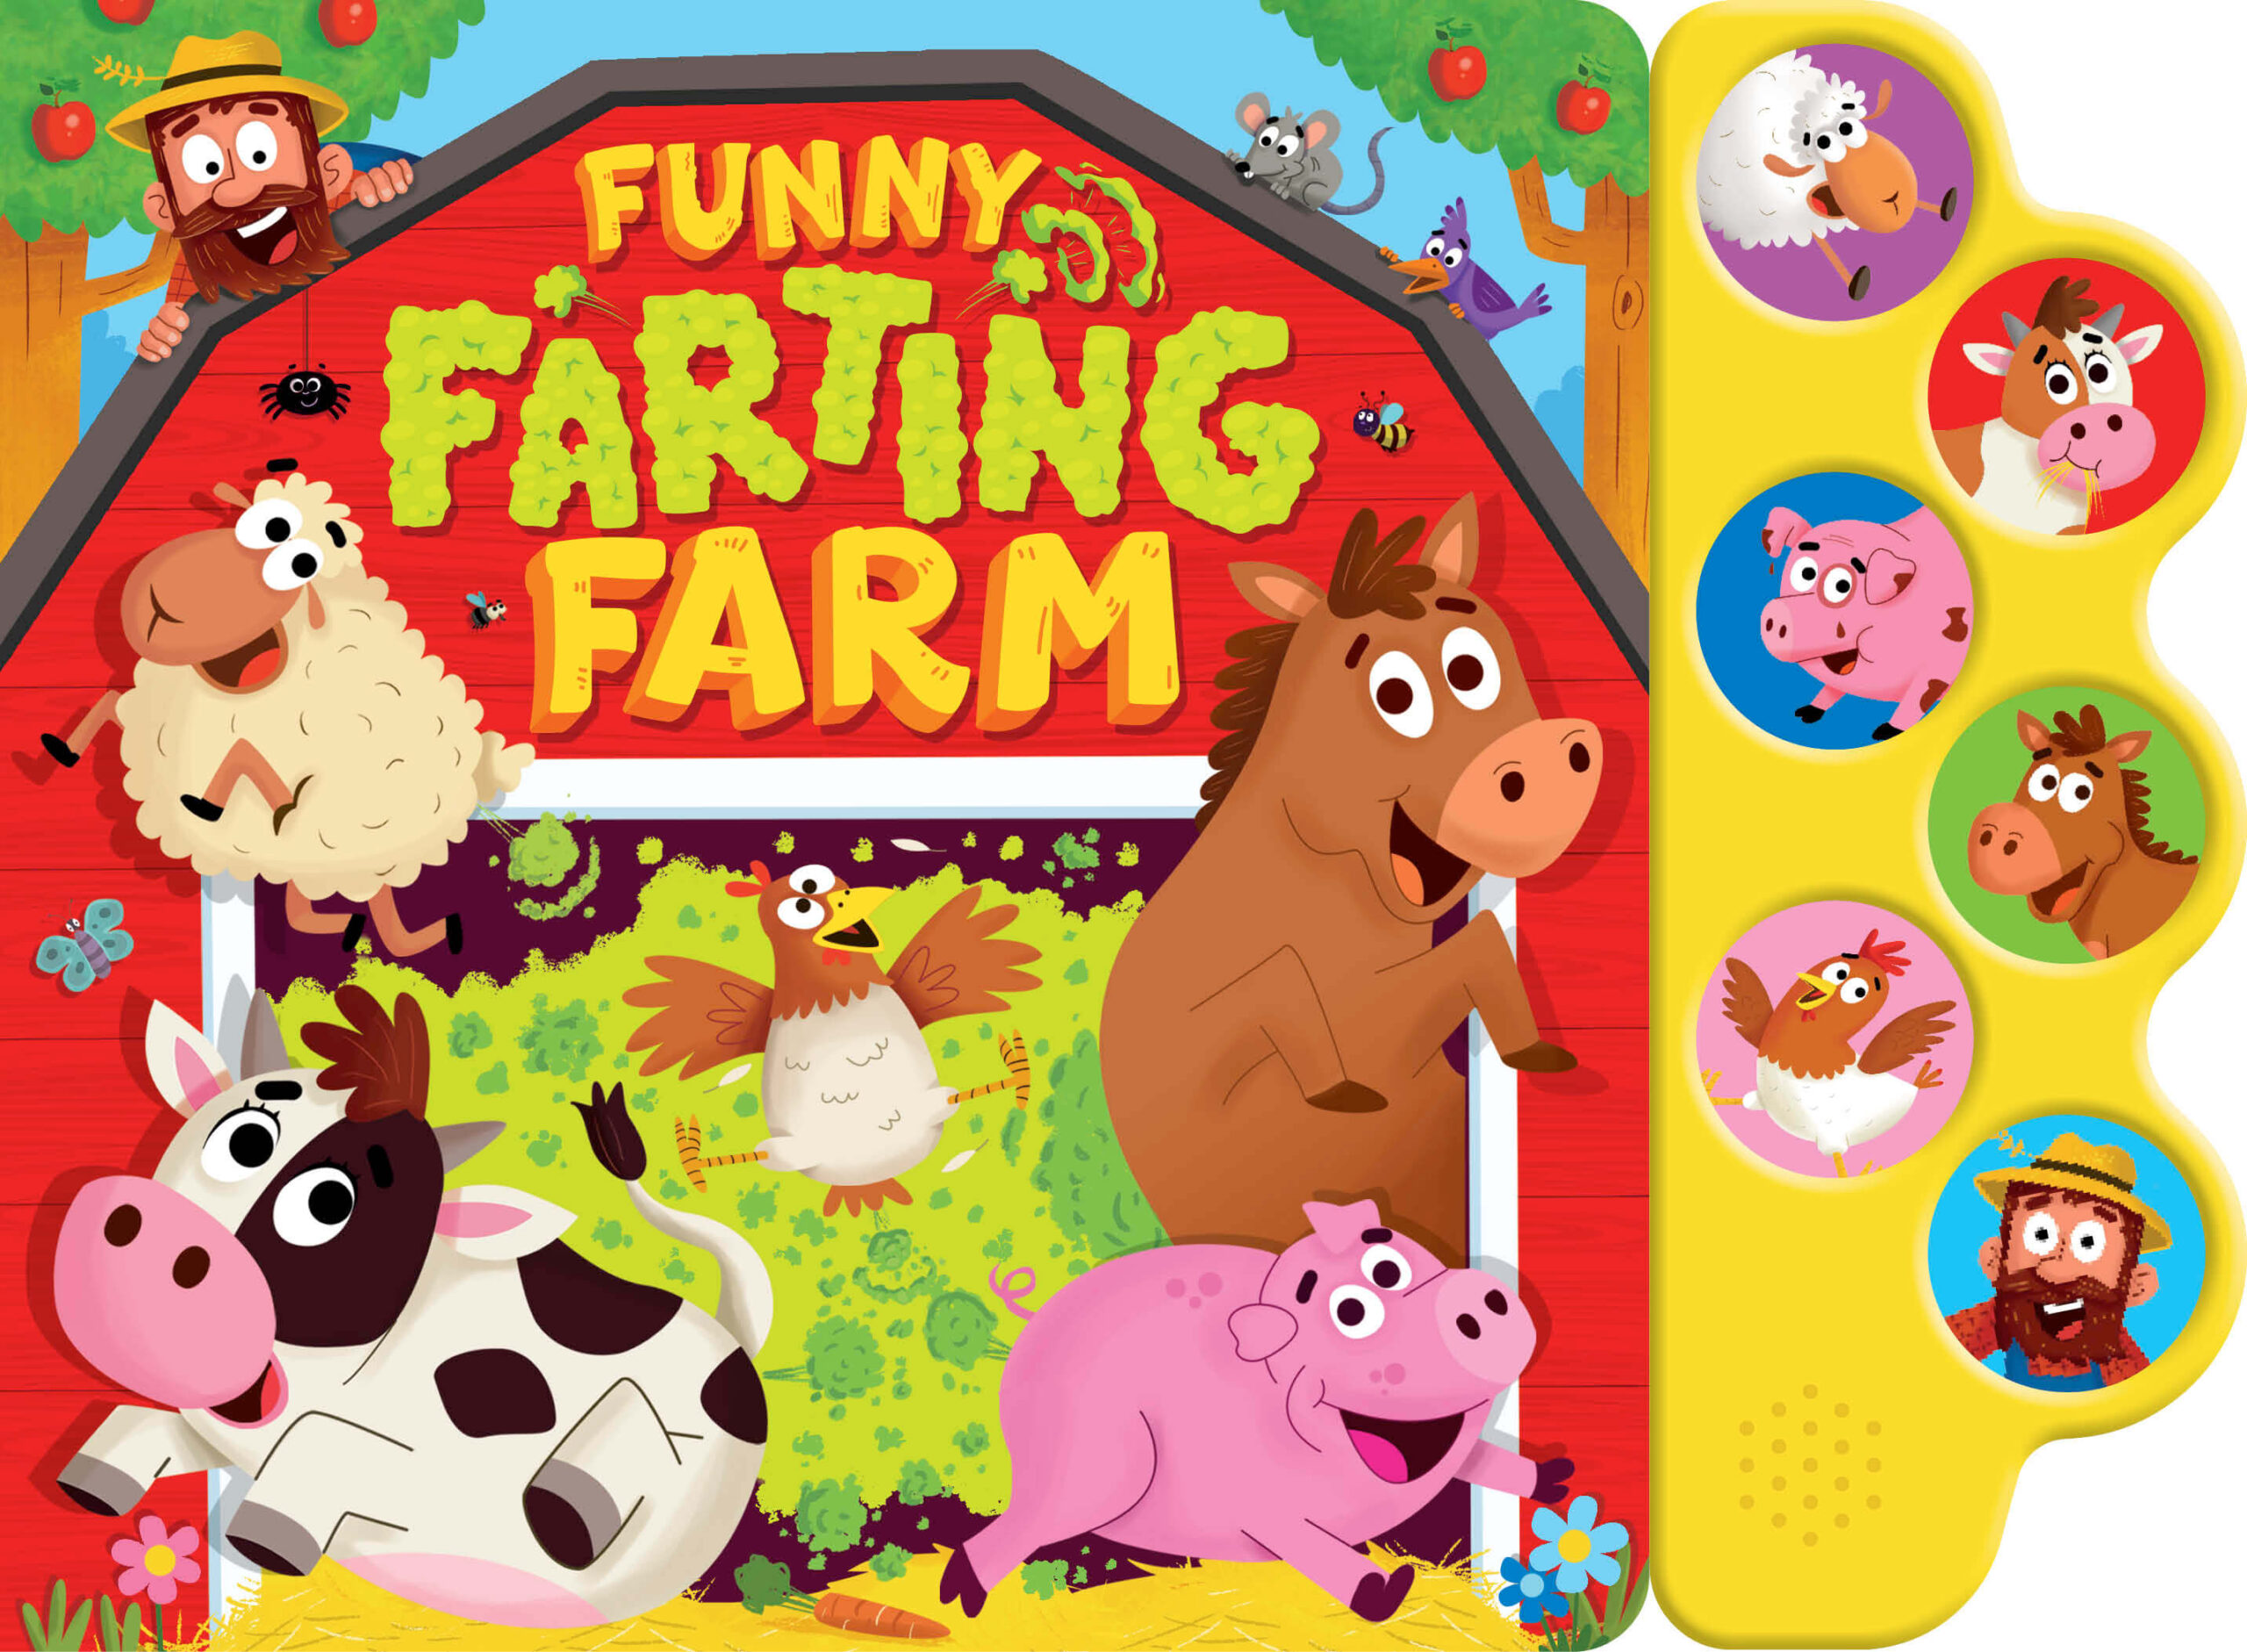 Funny Farting Farm